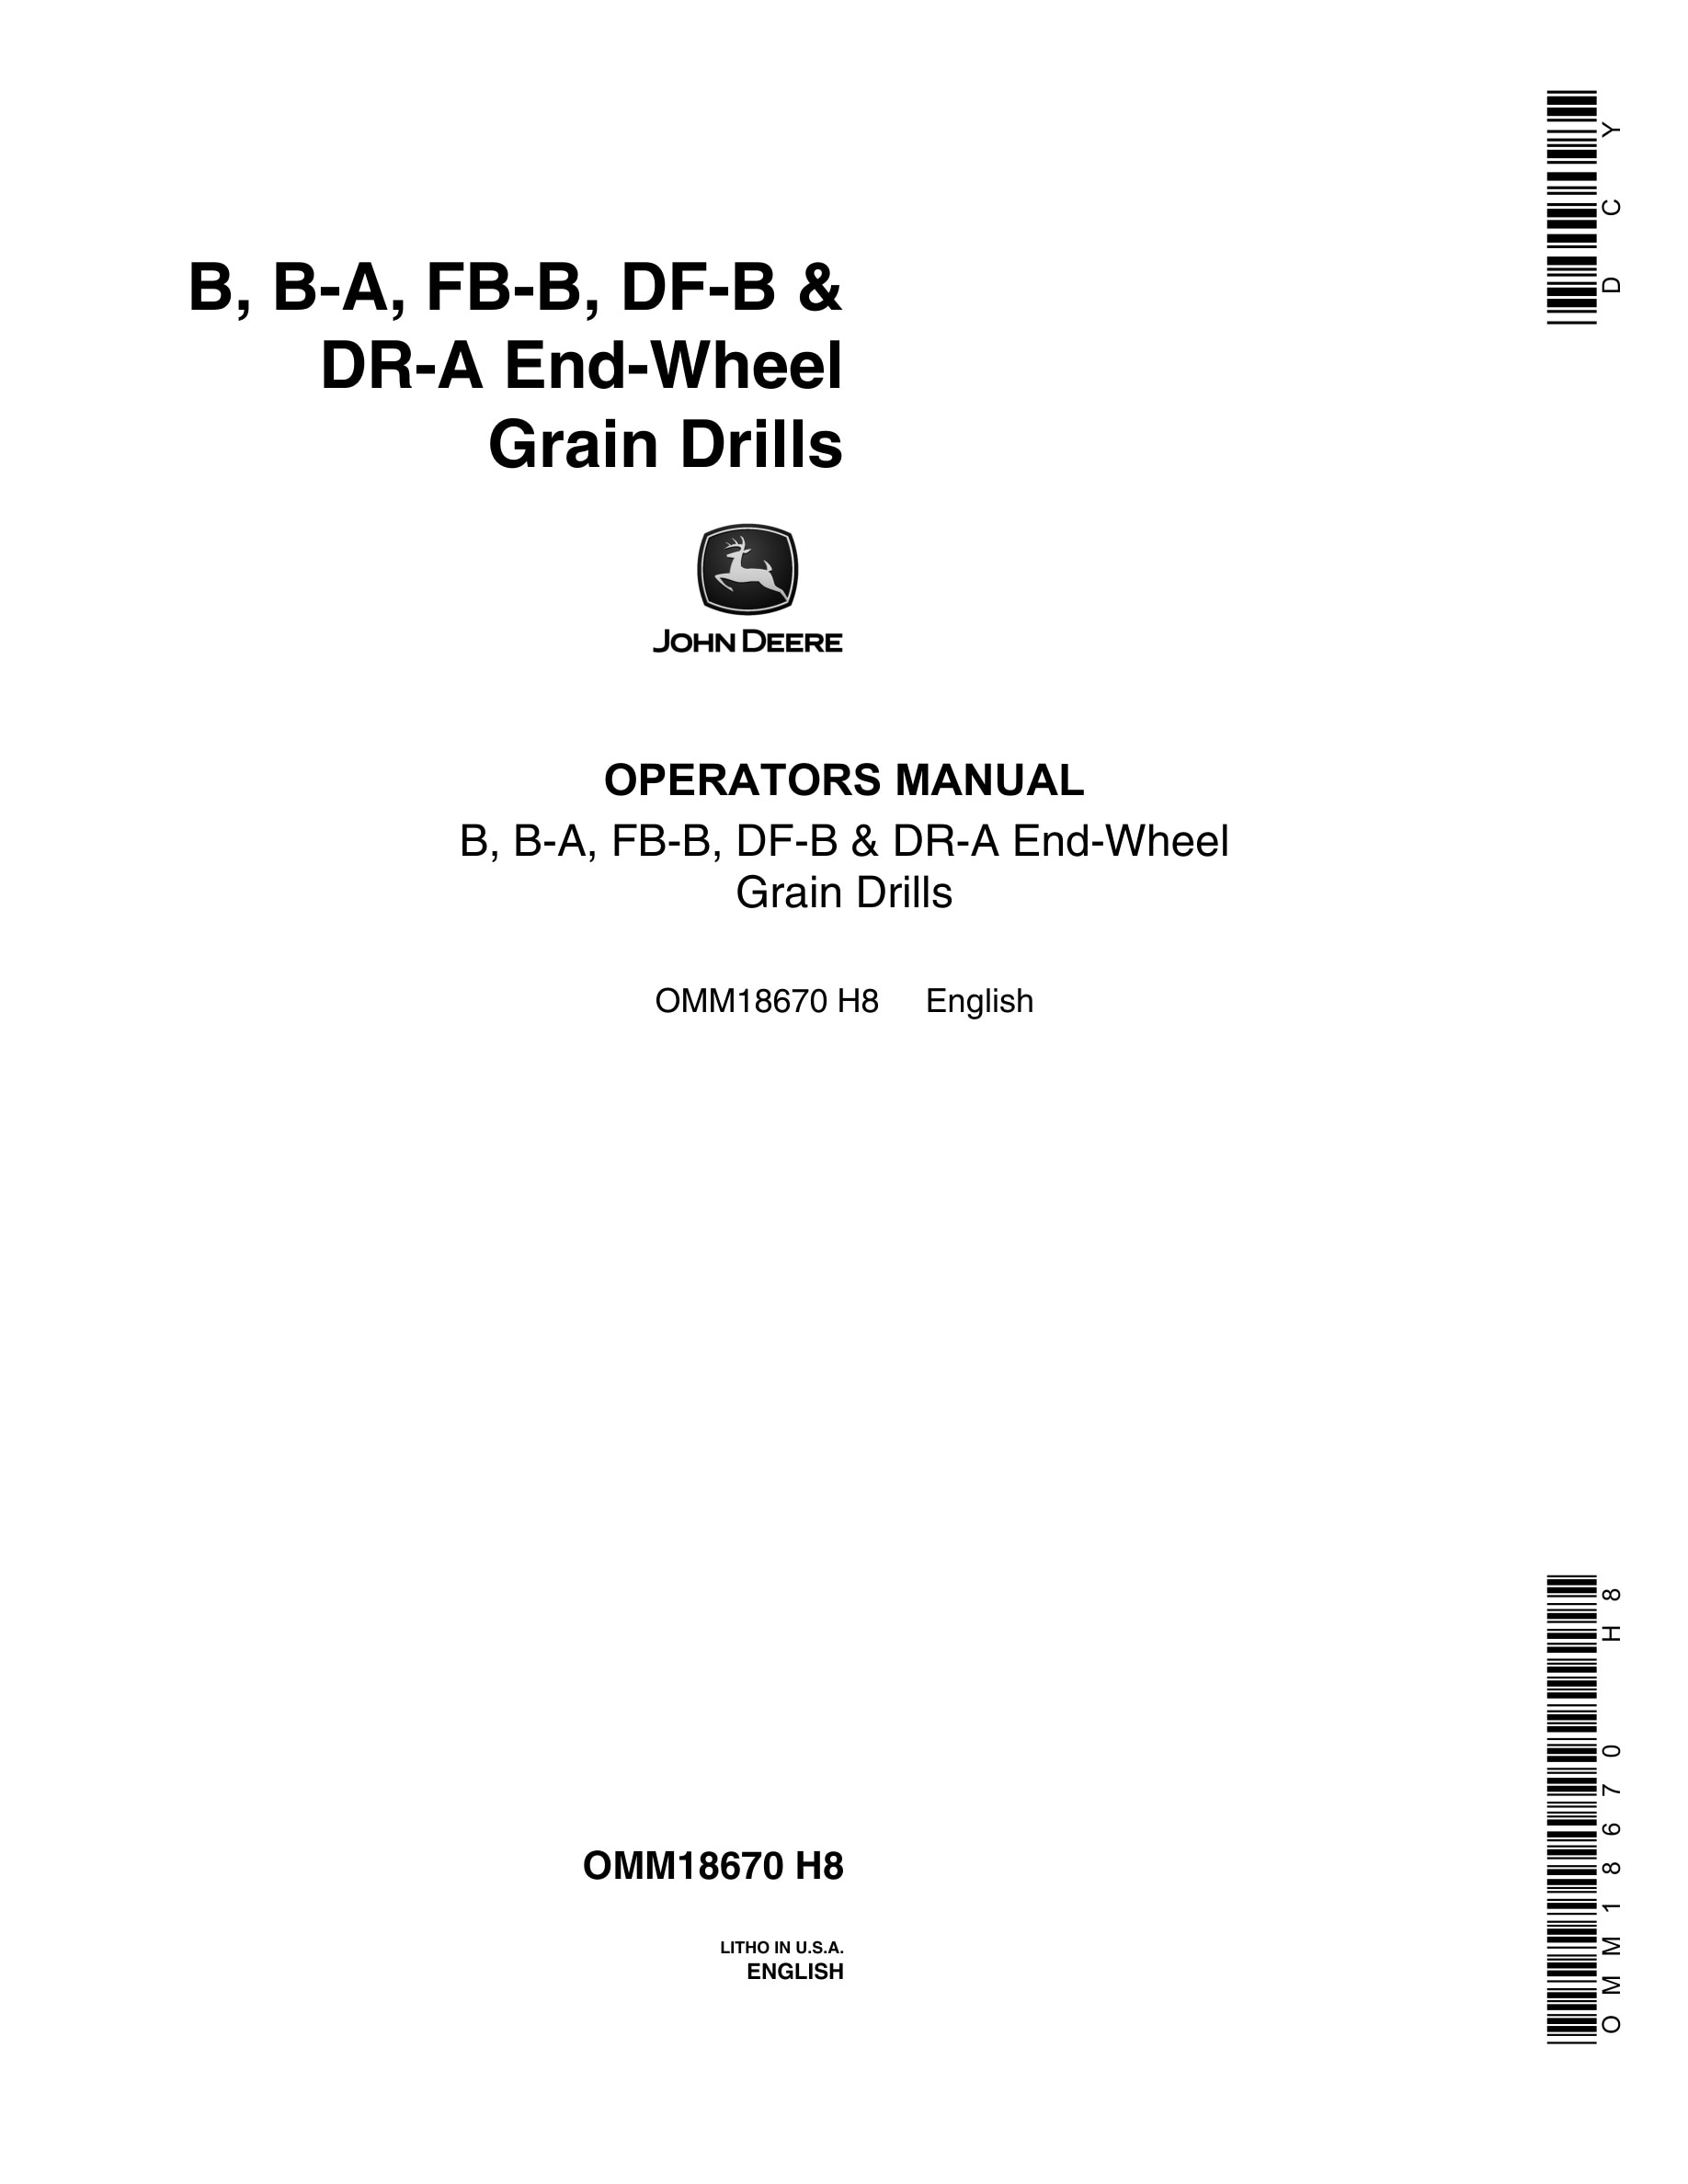 John Deere B, B-A, FB-B, DF-B & DR-A End-Wheel Grain Drill Operator Manual OMM18670-1